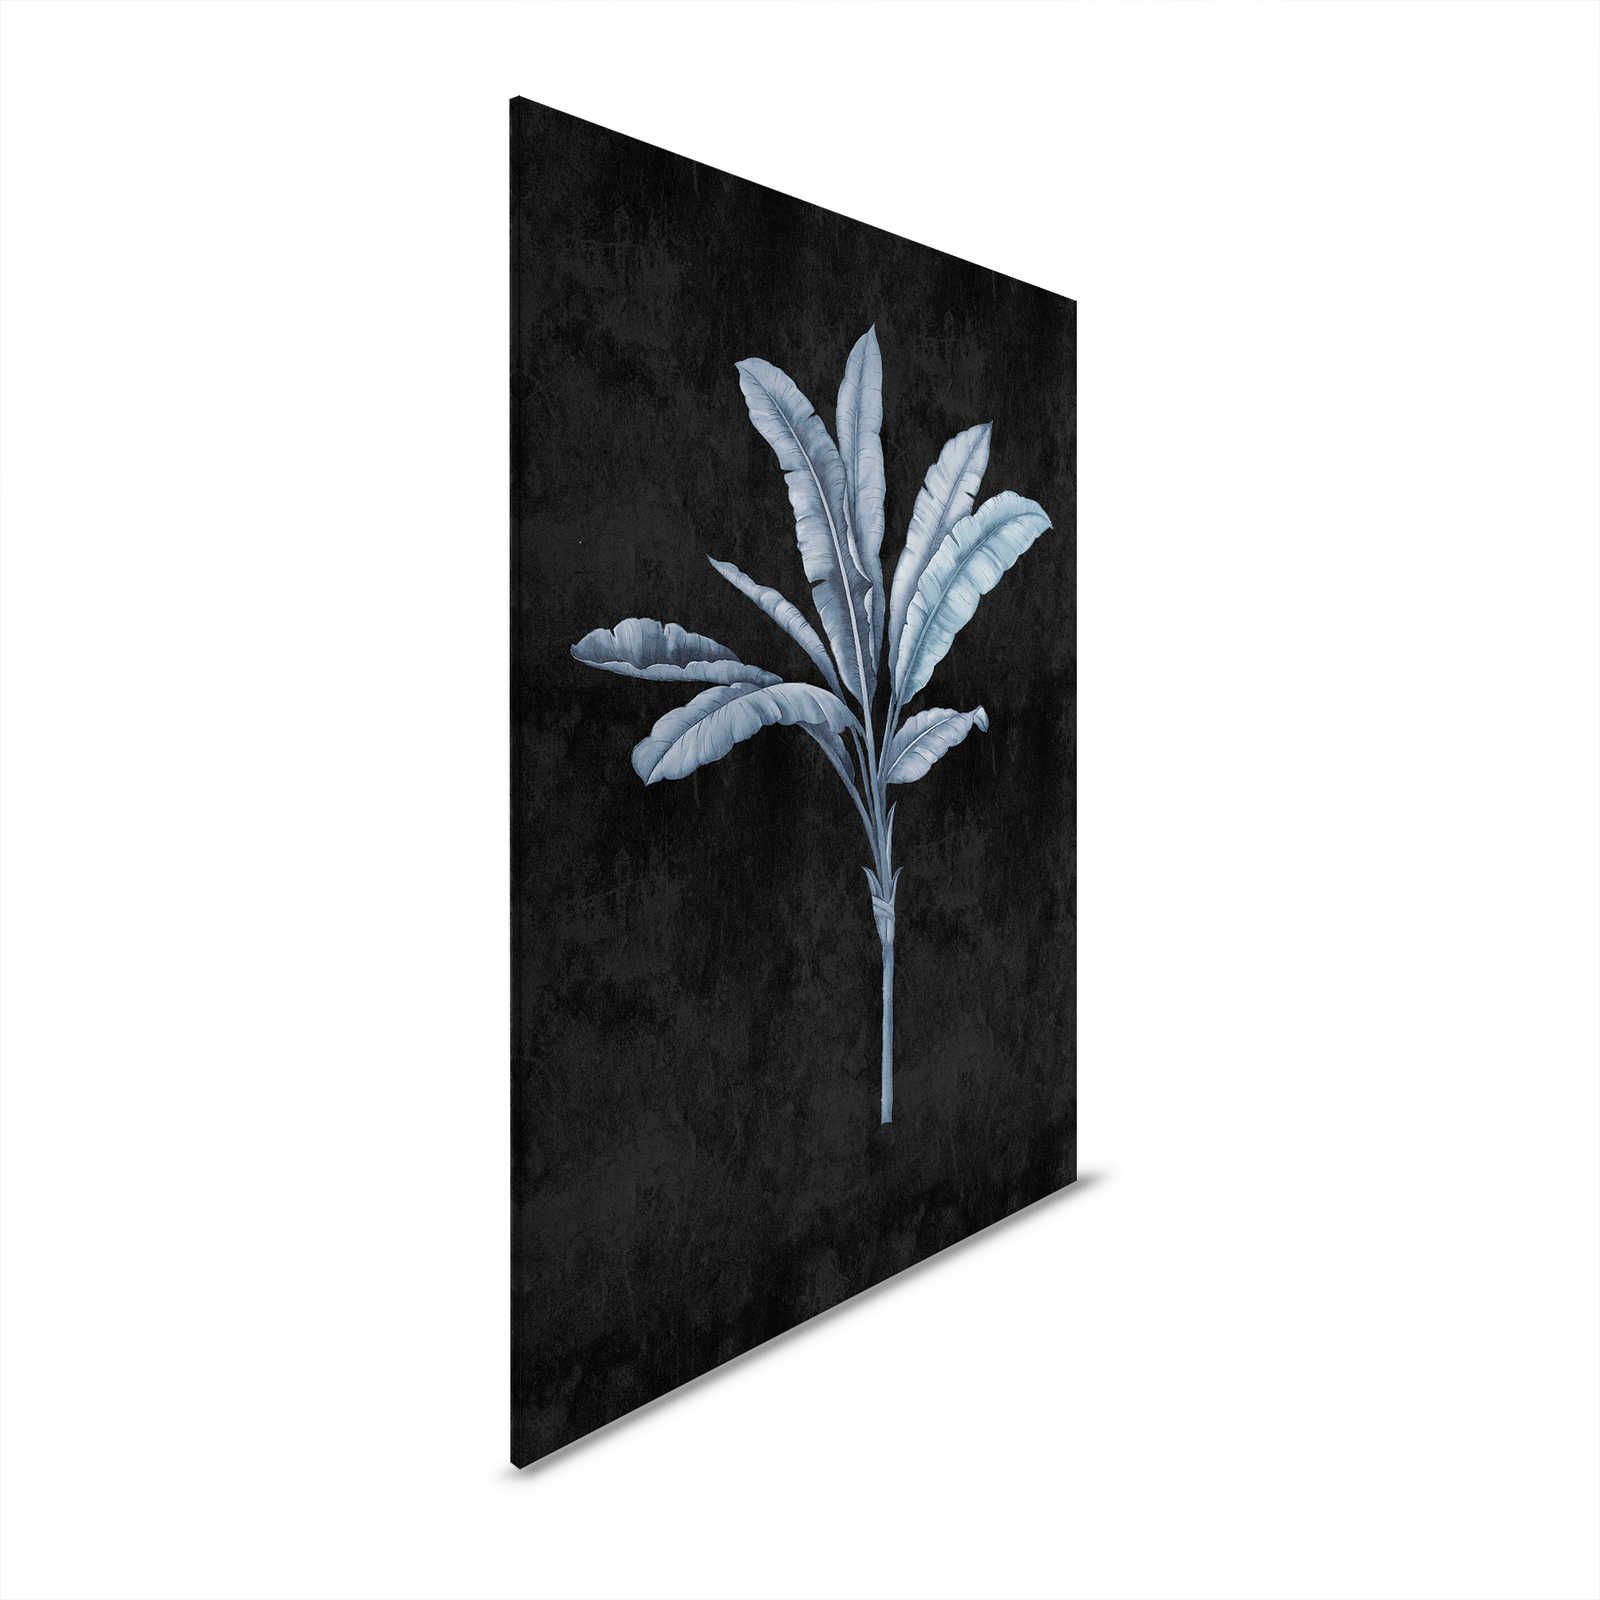 Fiji 2 - Canvas painting Black with Blue Grey Palm motif - 0.60 m x 0.90 m
